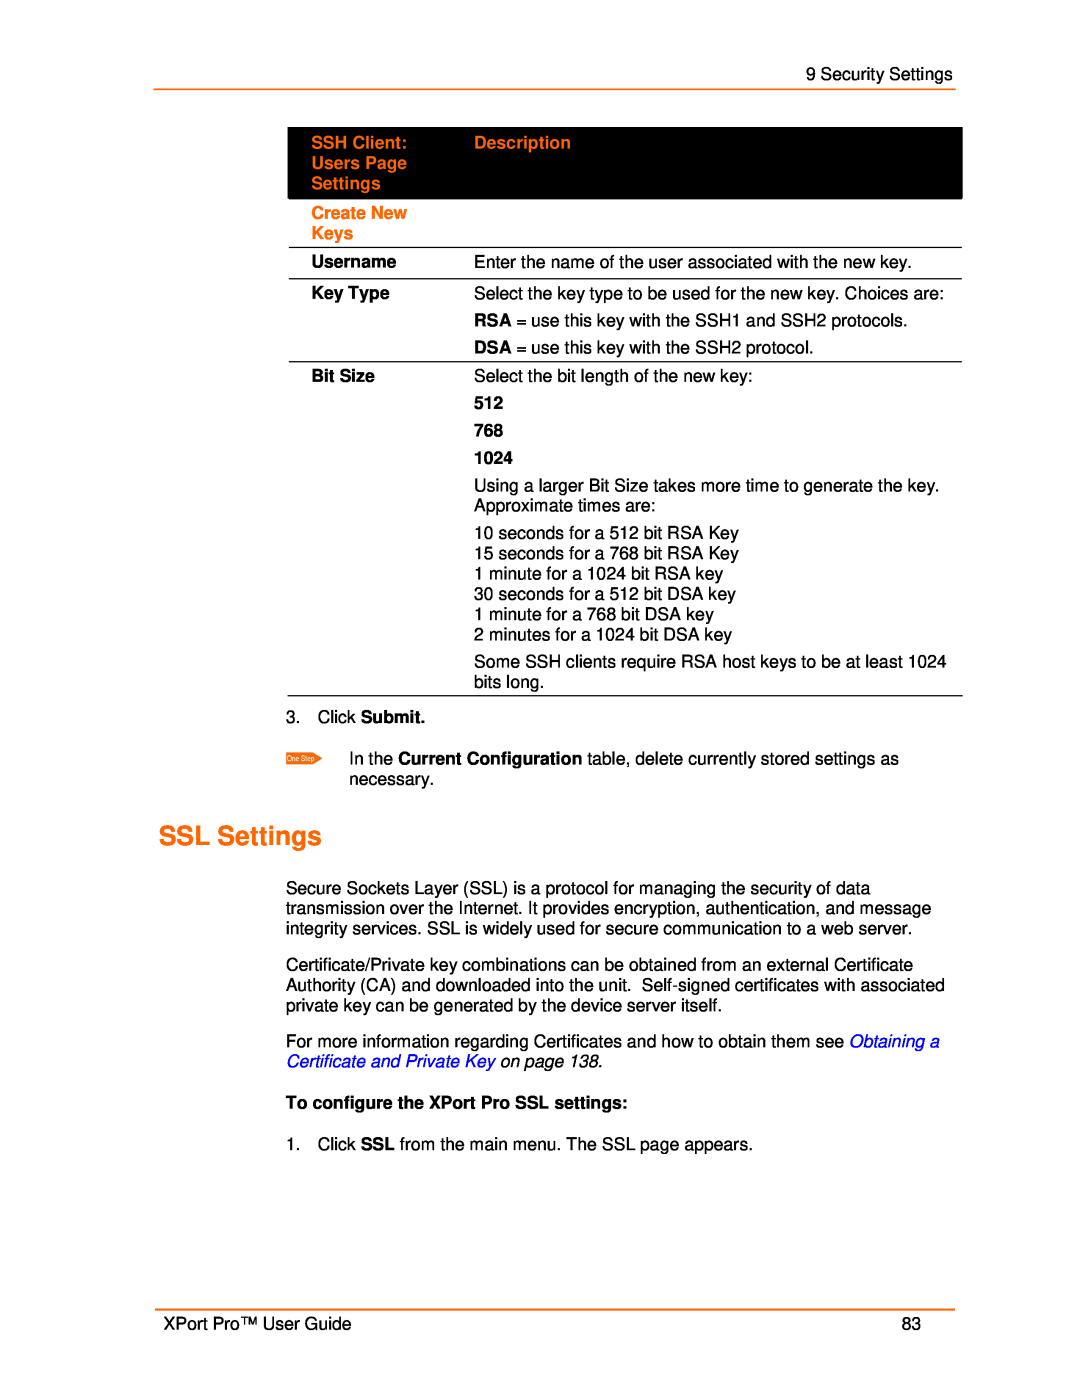 Lantronix 900-560 manual SSL Settings, SSH Client, Description, Users Page, Create New, Keys 